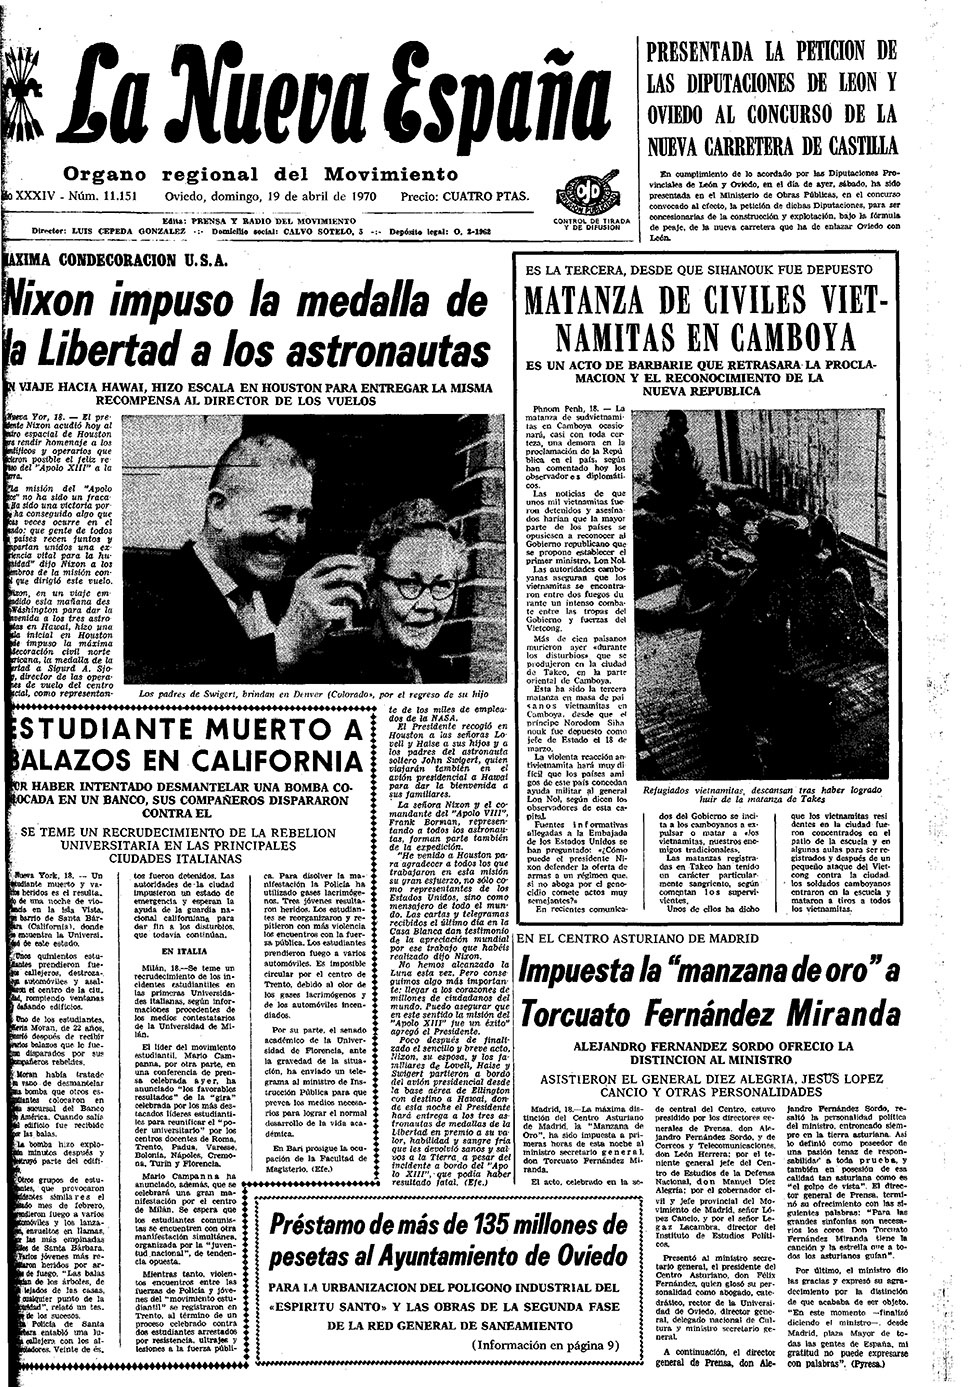 Portada del Domingo, 19 de Abril de 1970